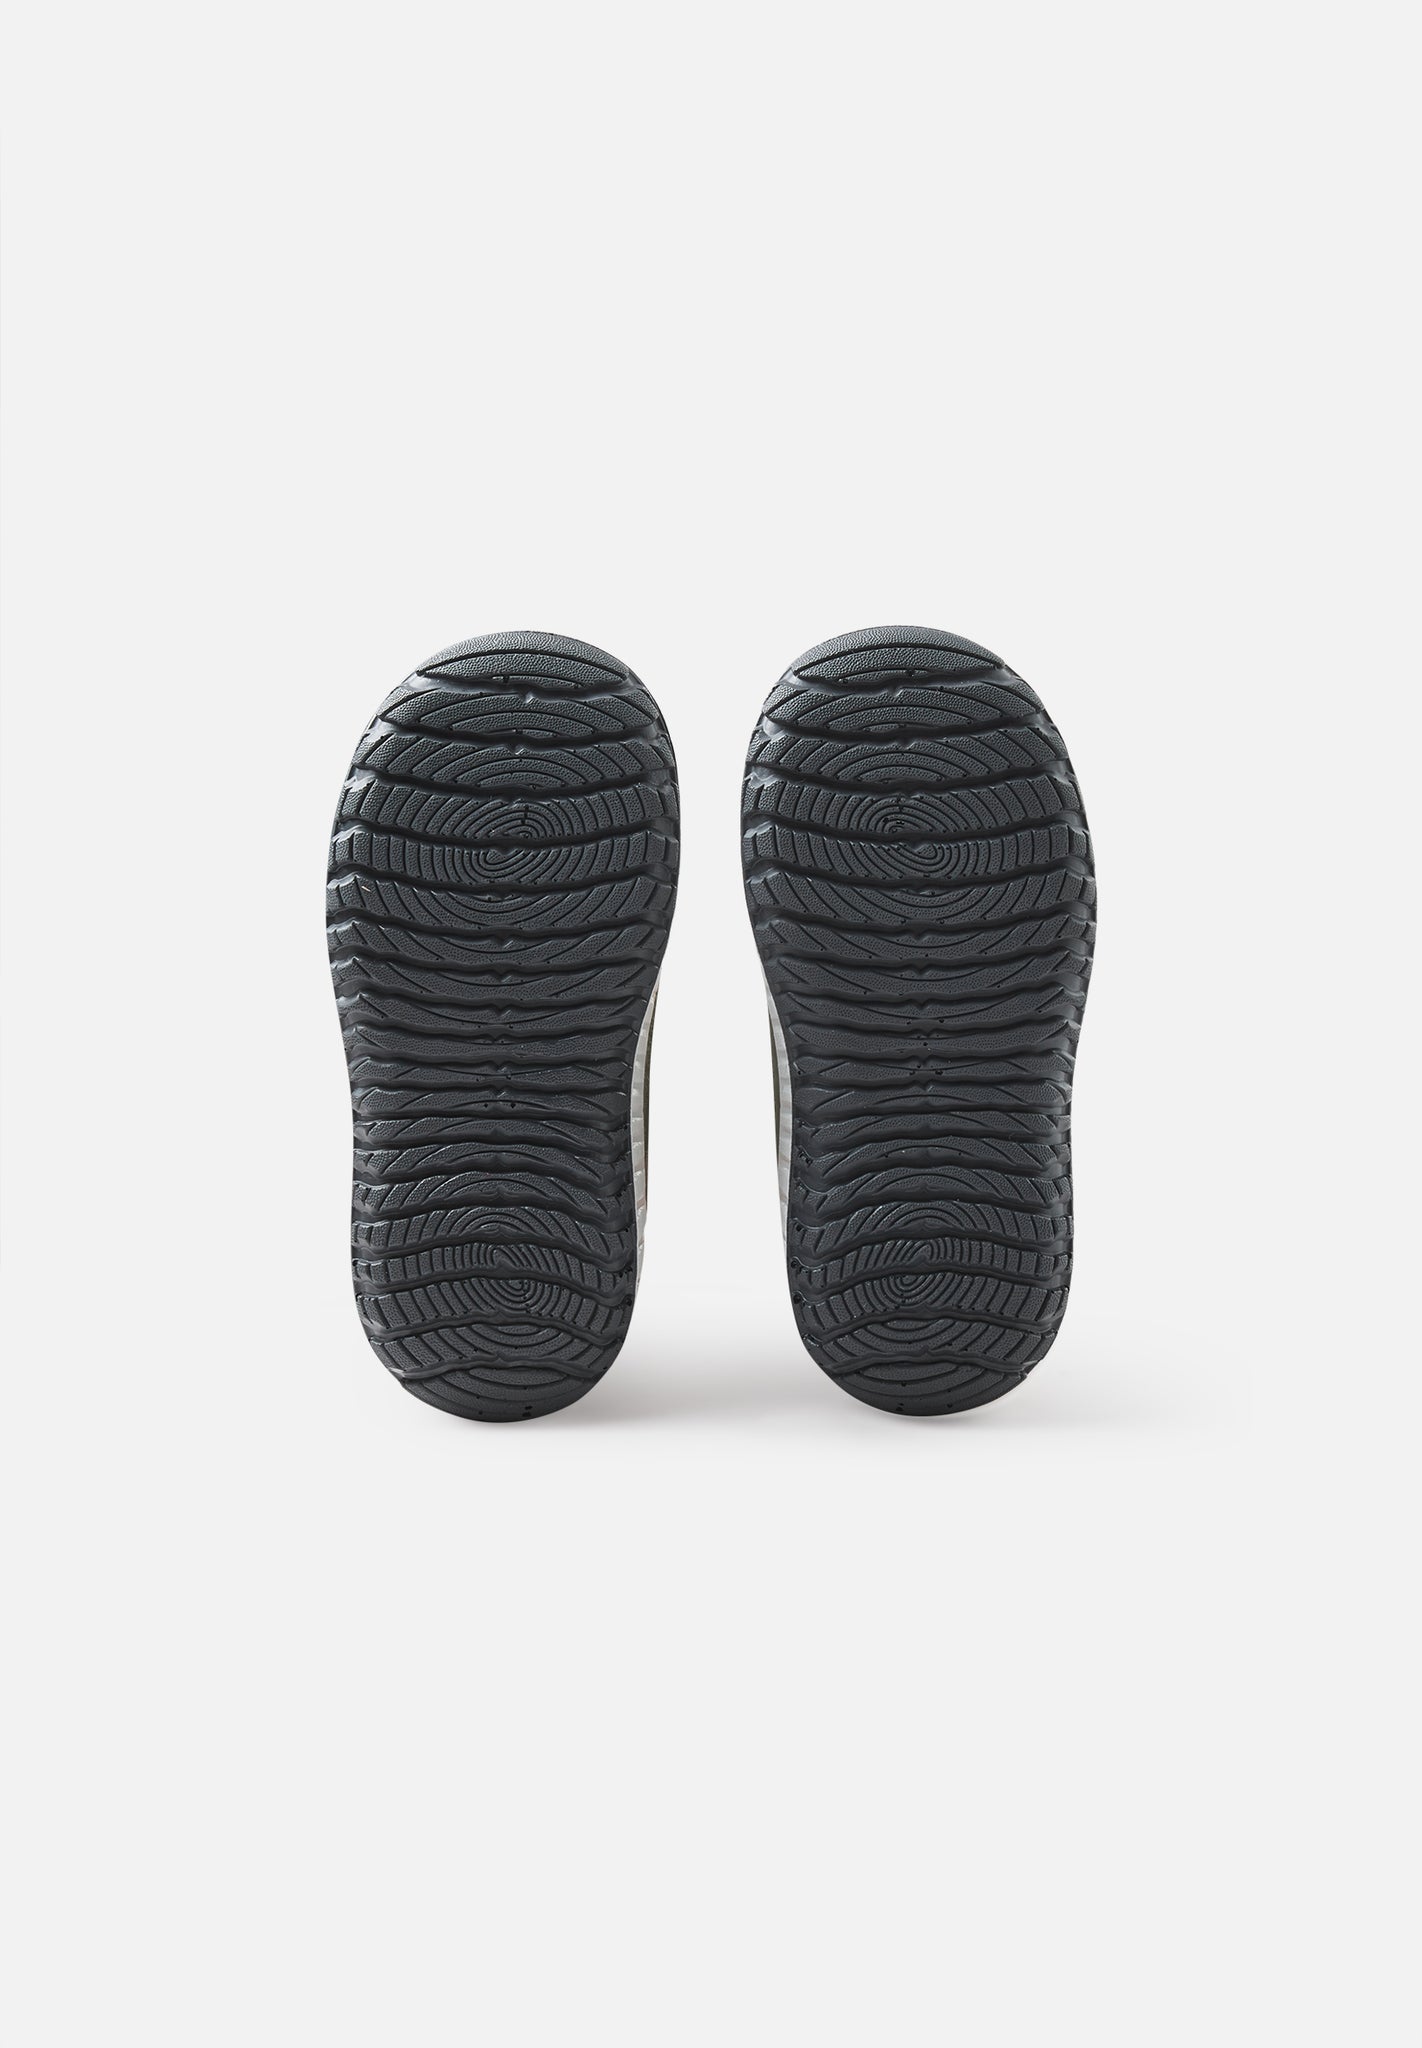 Velcro sneakers <tc>Reima</tc> tec <tc>Reima</tc>  Passo size 25